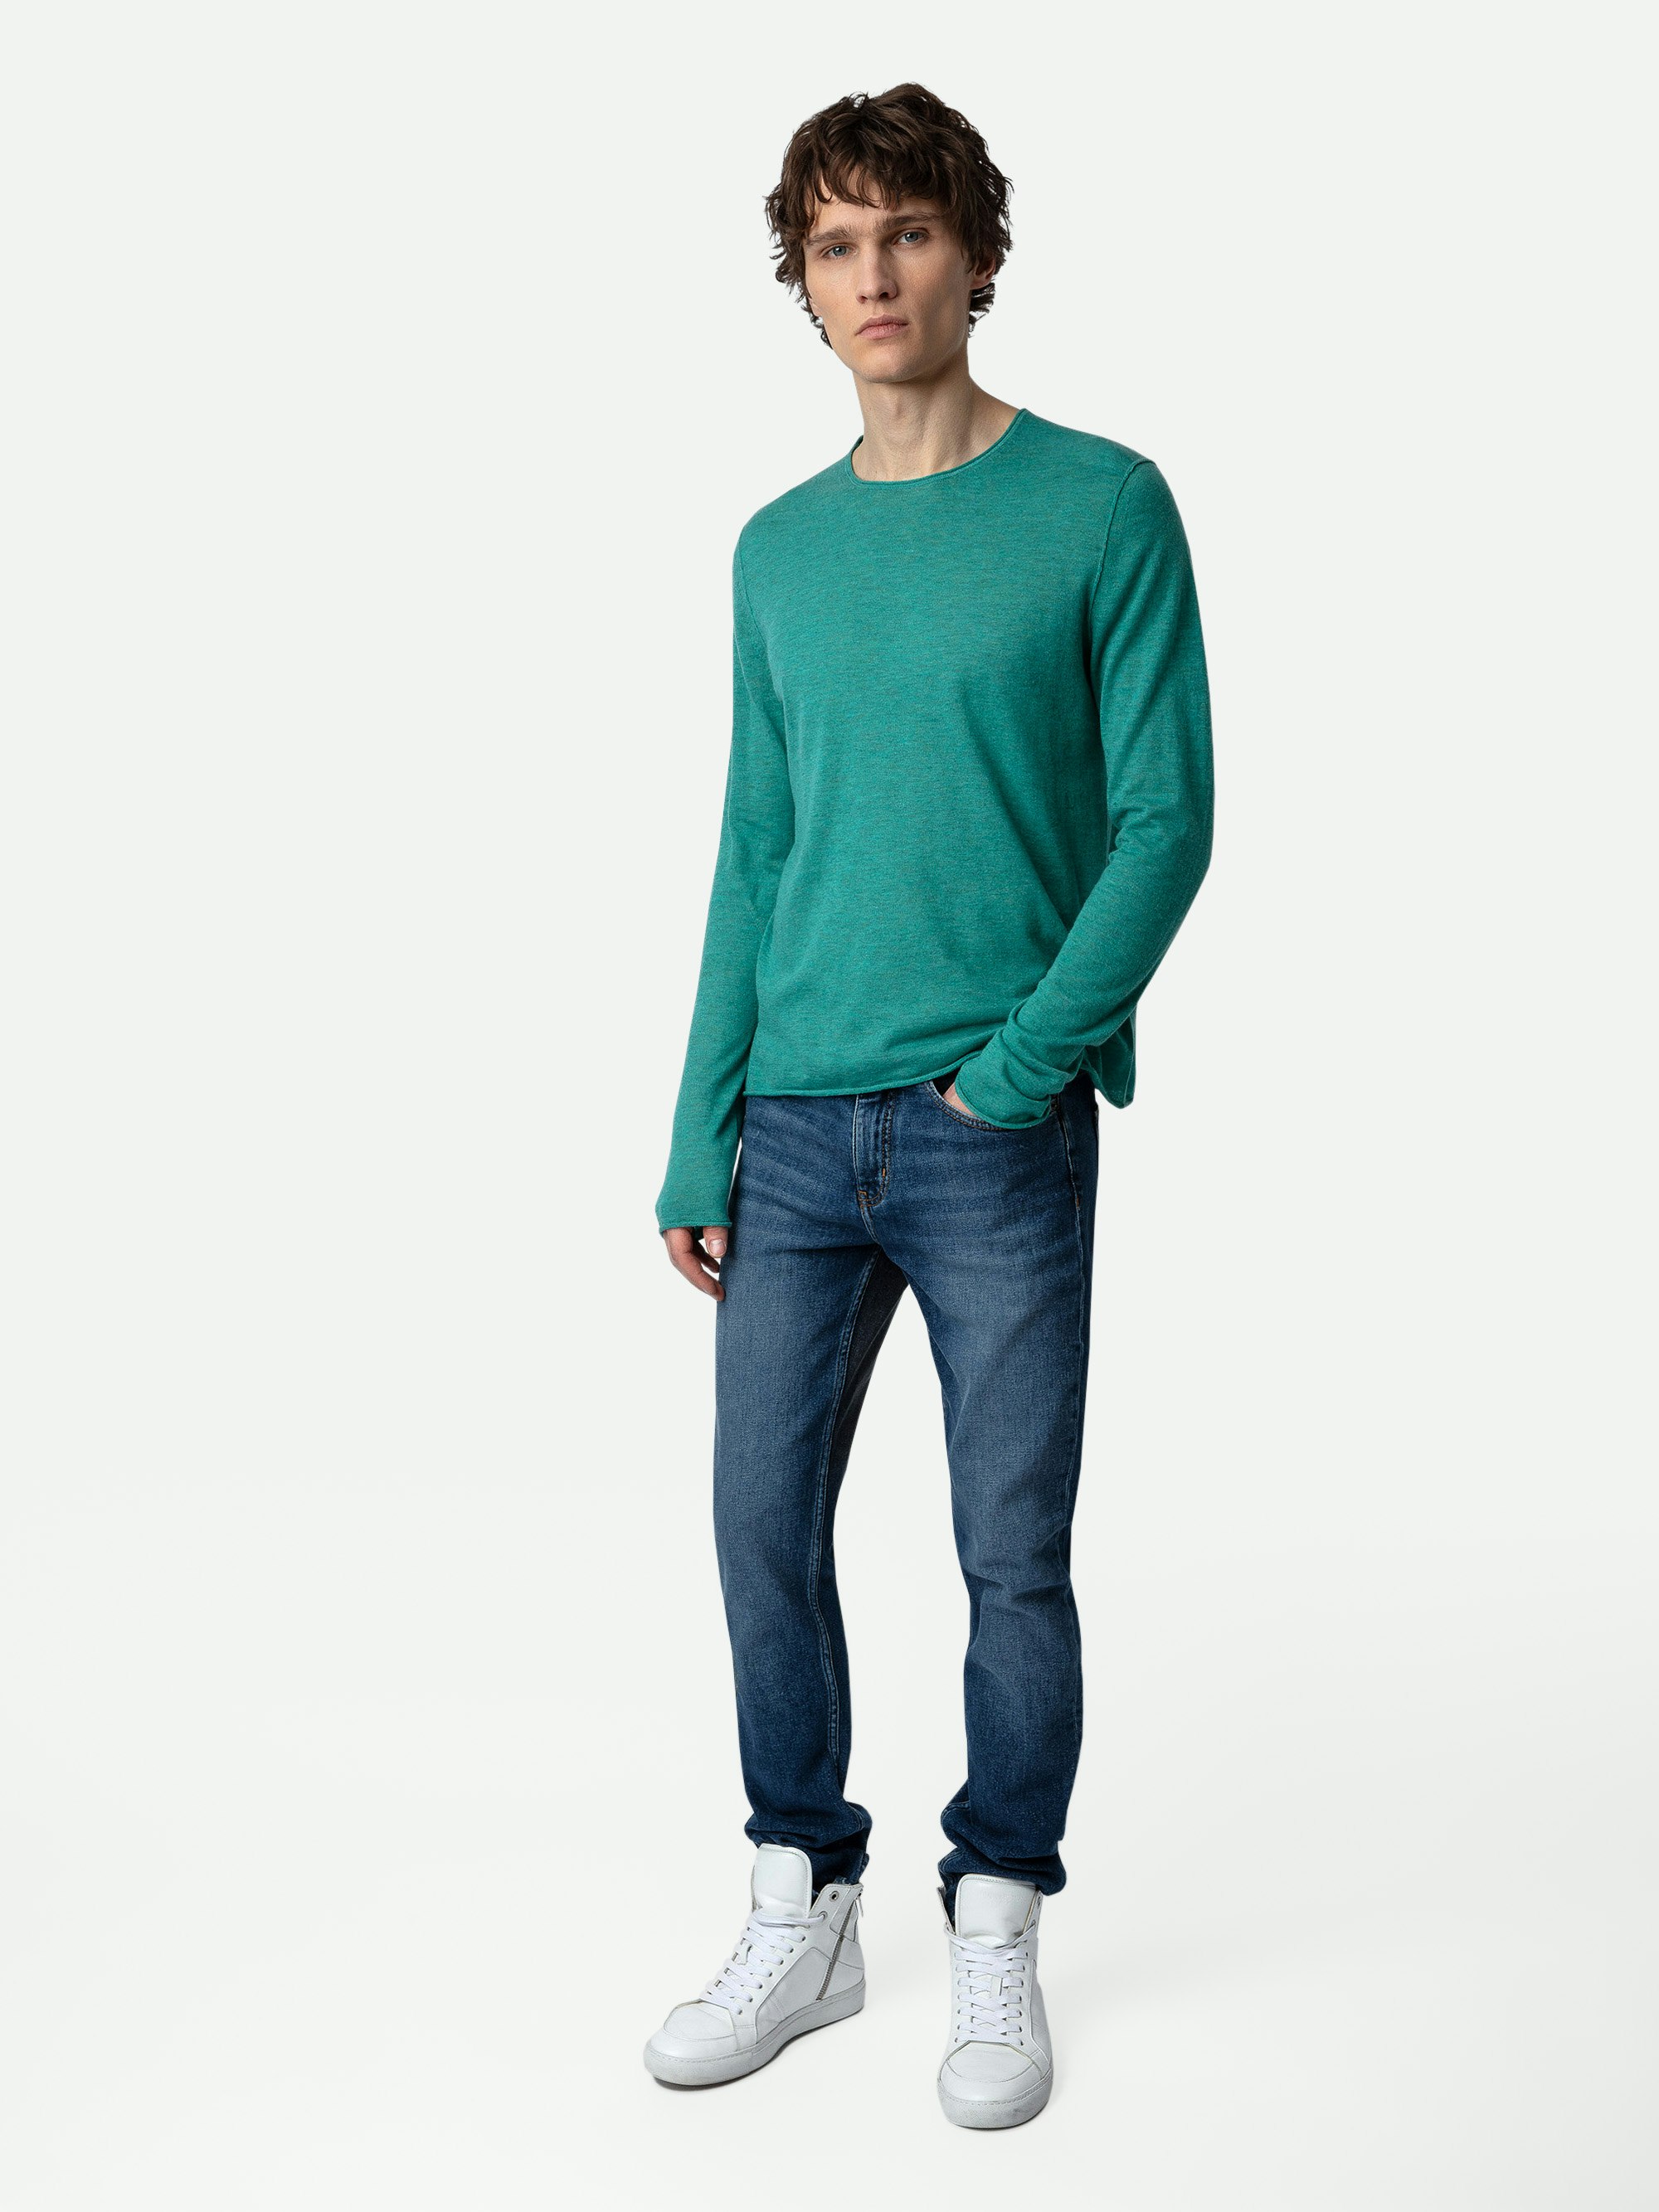 Pullover Teiss 100% Kaschmir - Blaugrüner Pullover aus Feder100% Kaschmir mit Rundhalsausschnitt und langen Ärmeln.